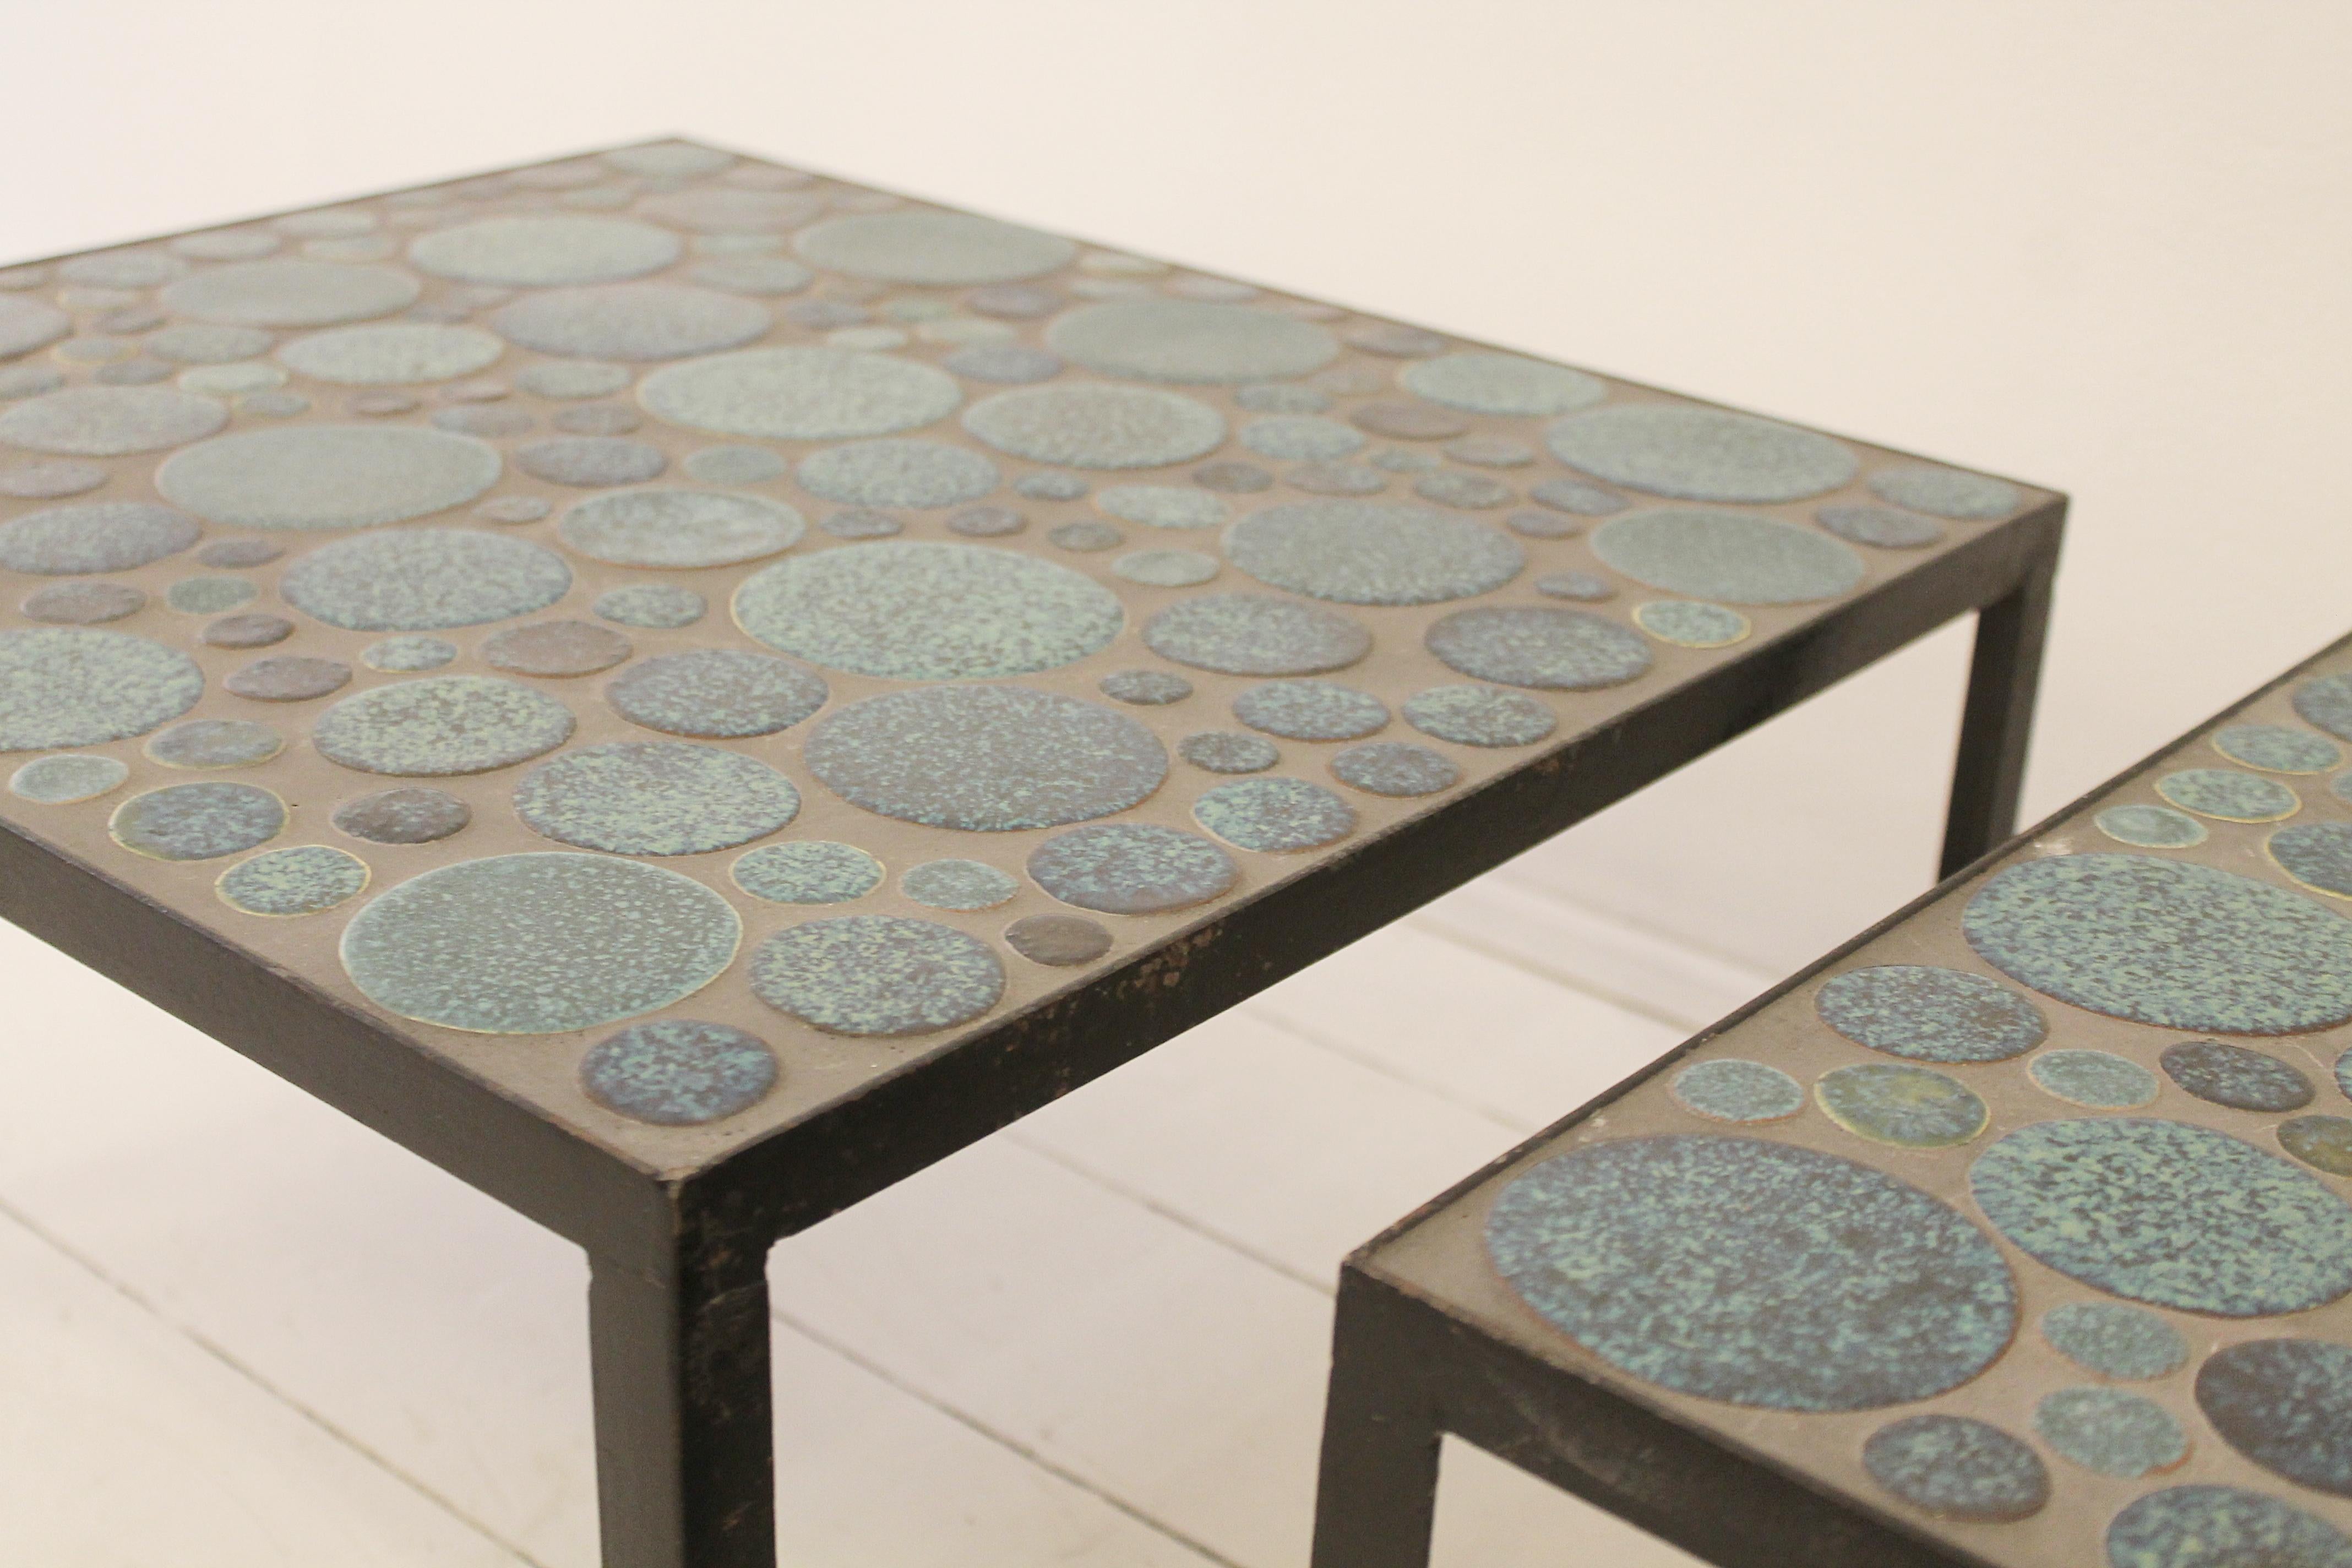 Pair of contemporain ceramic coffee tables by Aliette Vliers.